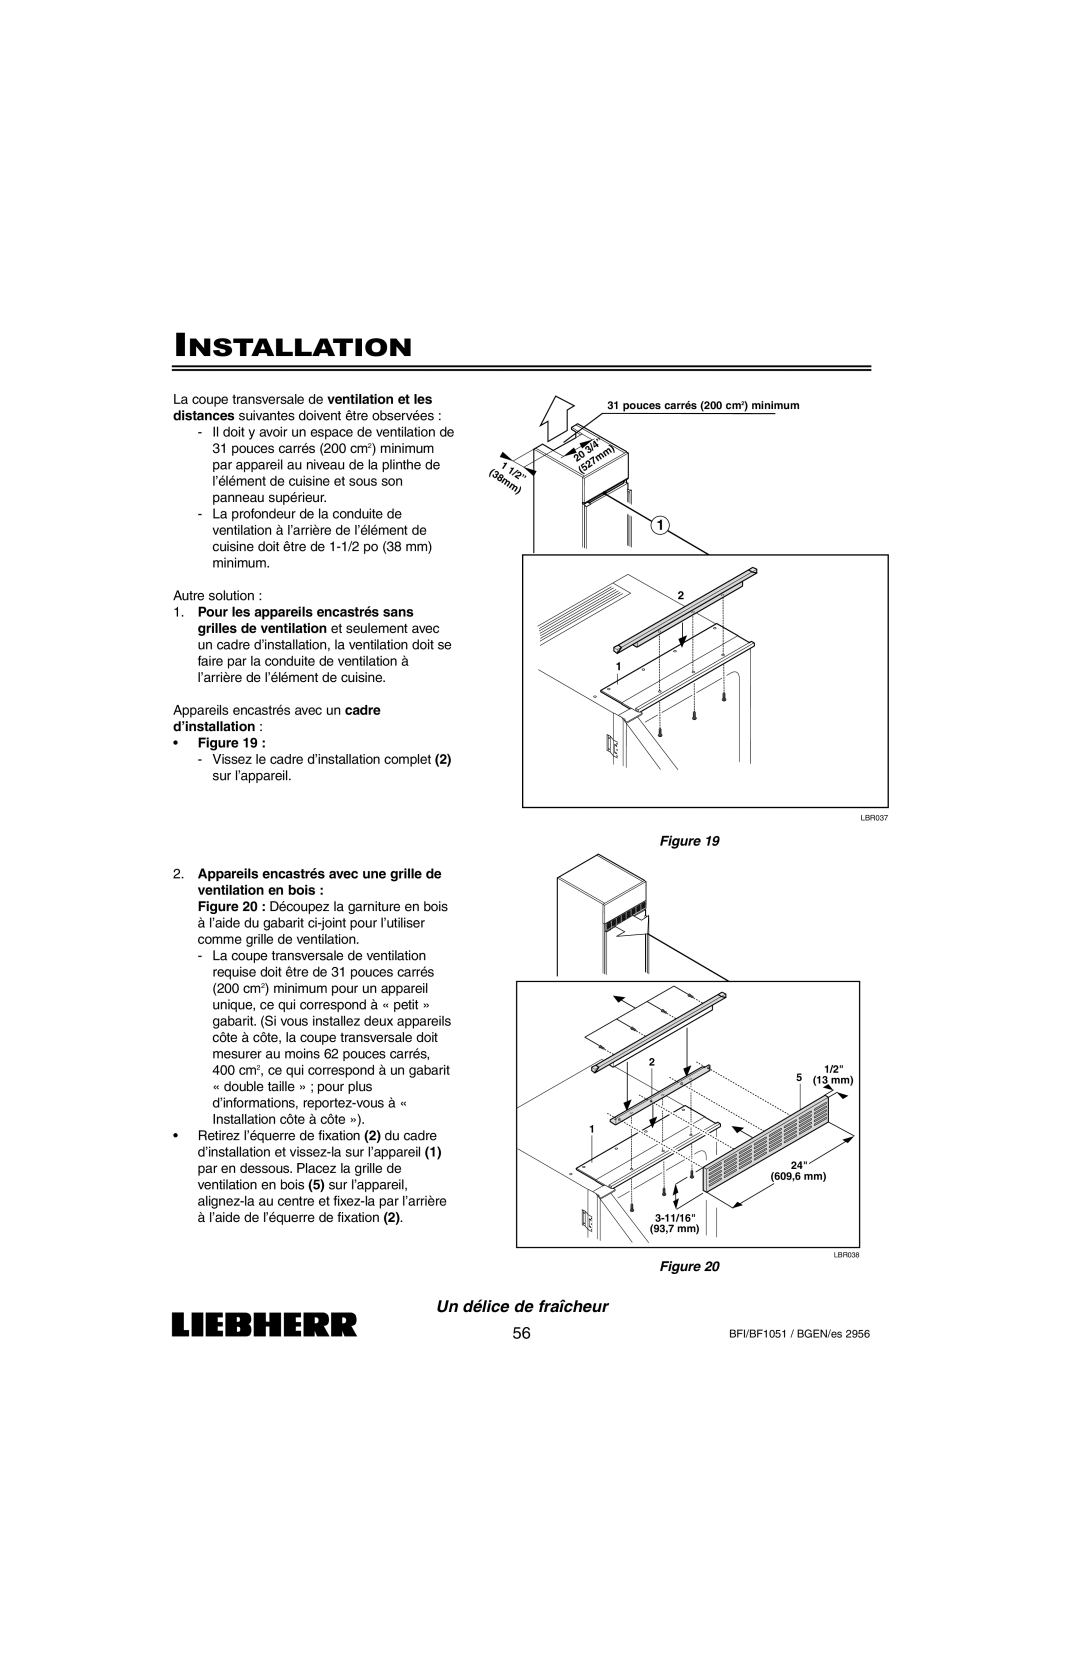 Liebherr BFI1051, BF1051 installation instructions Installation, Un délice de fraîcheur, 1/2”, Figure 